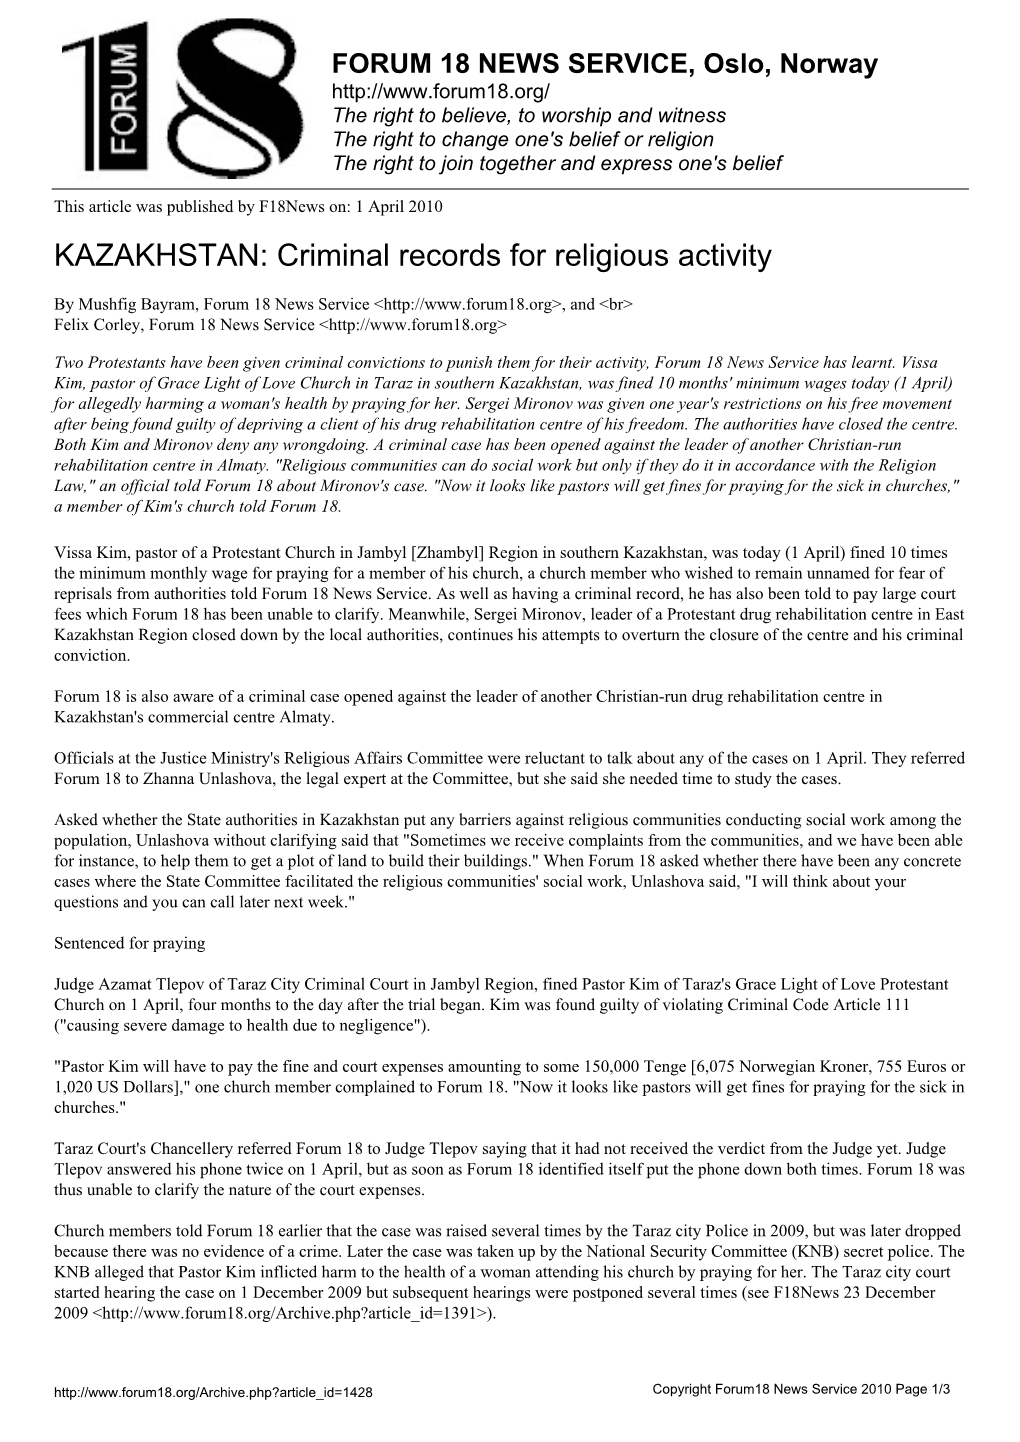 KAZAKHSTAN: Criminal Records for Religious Activity